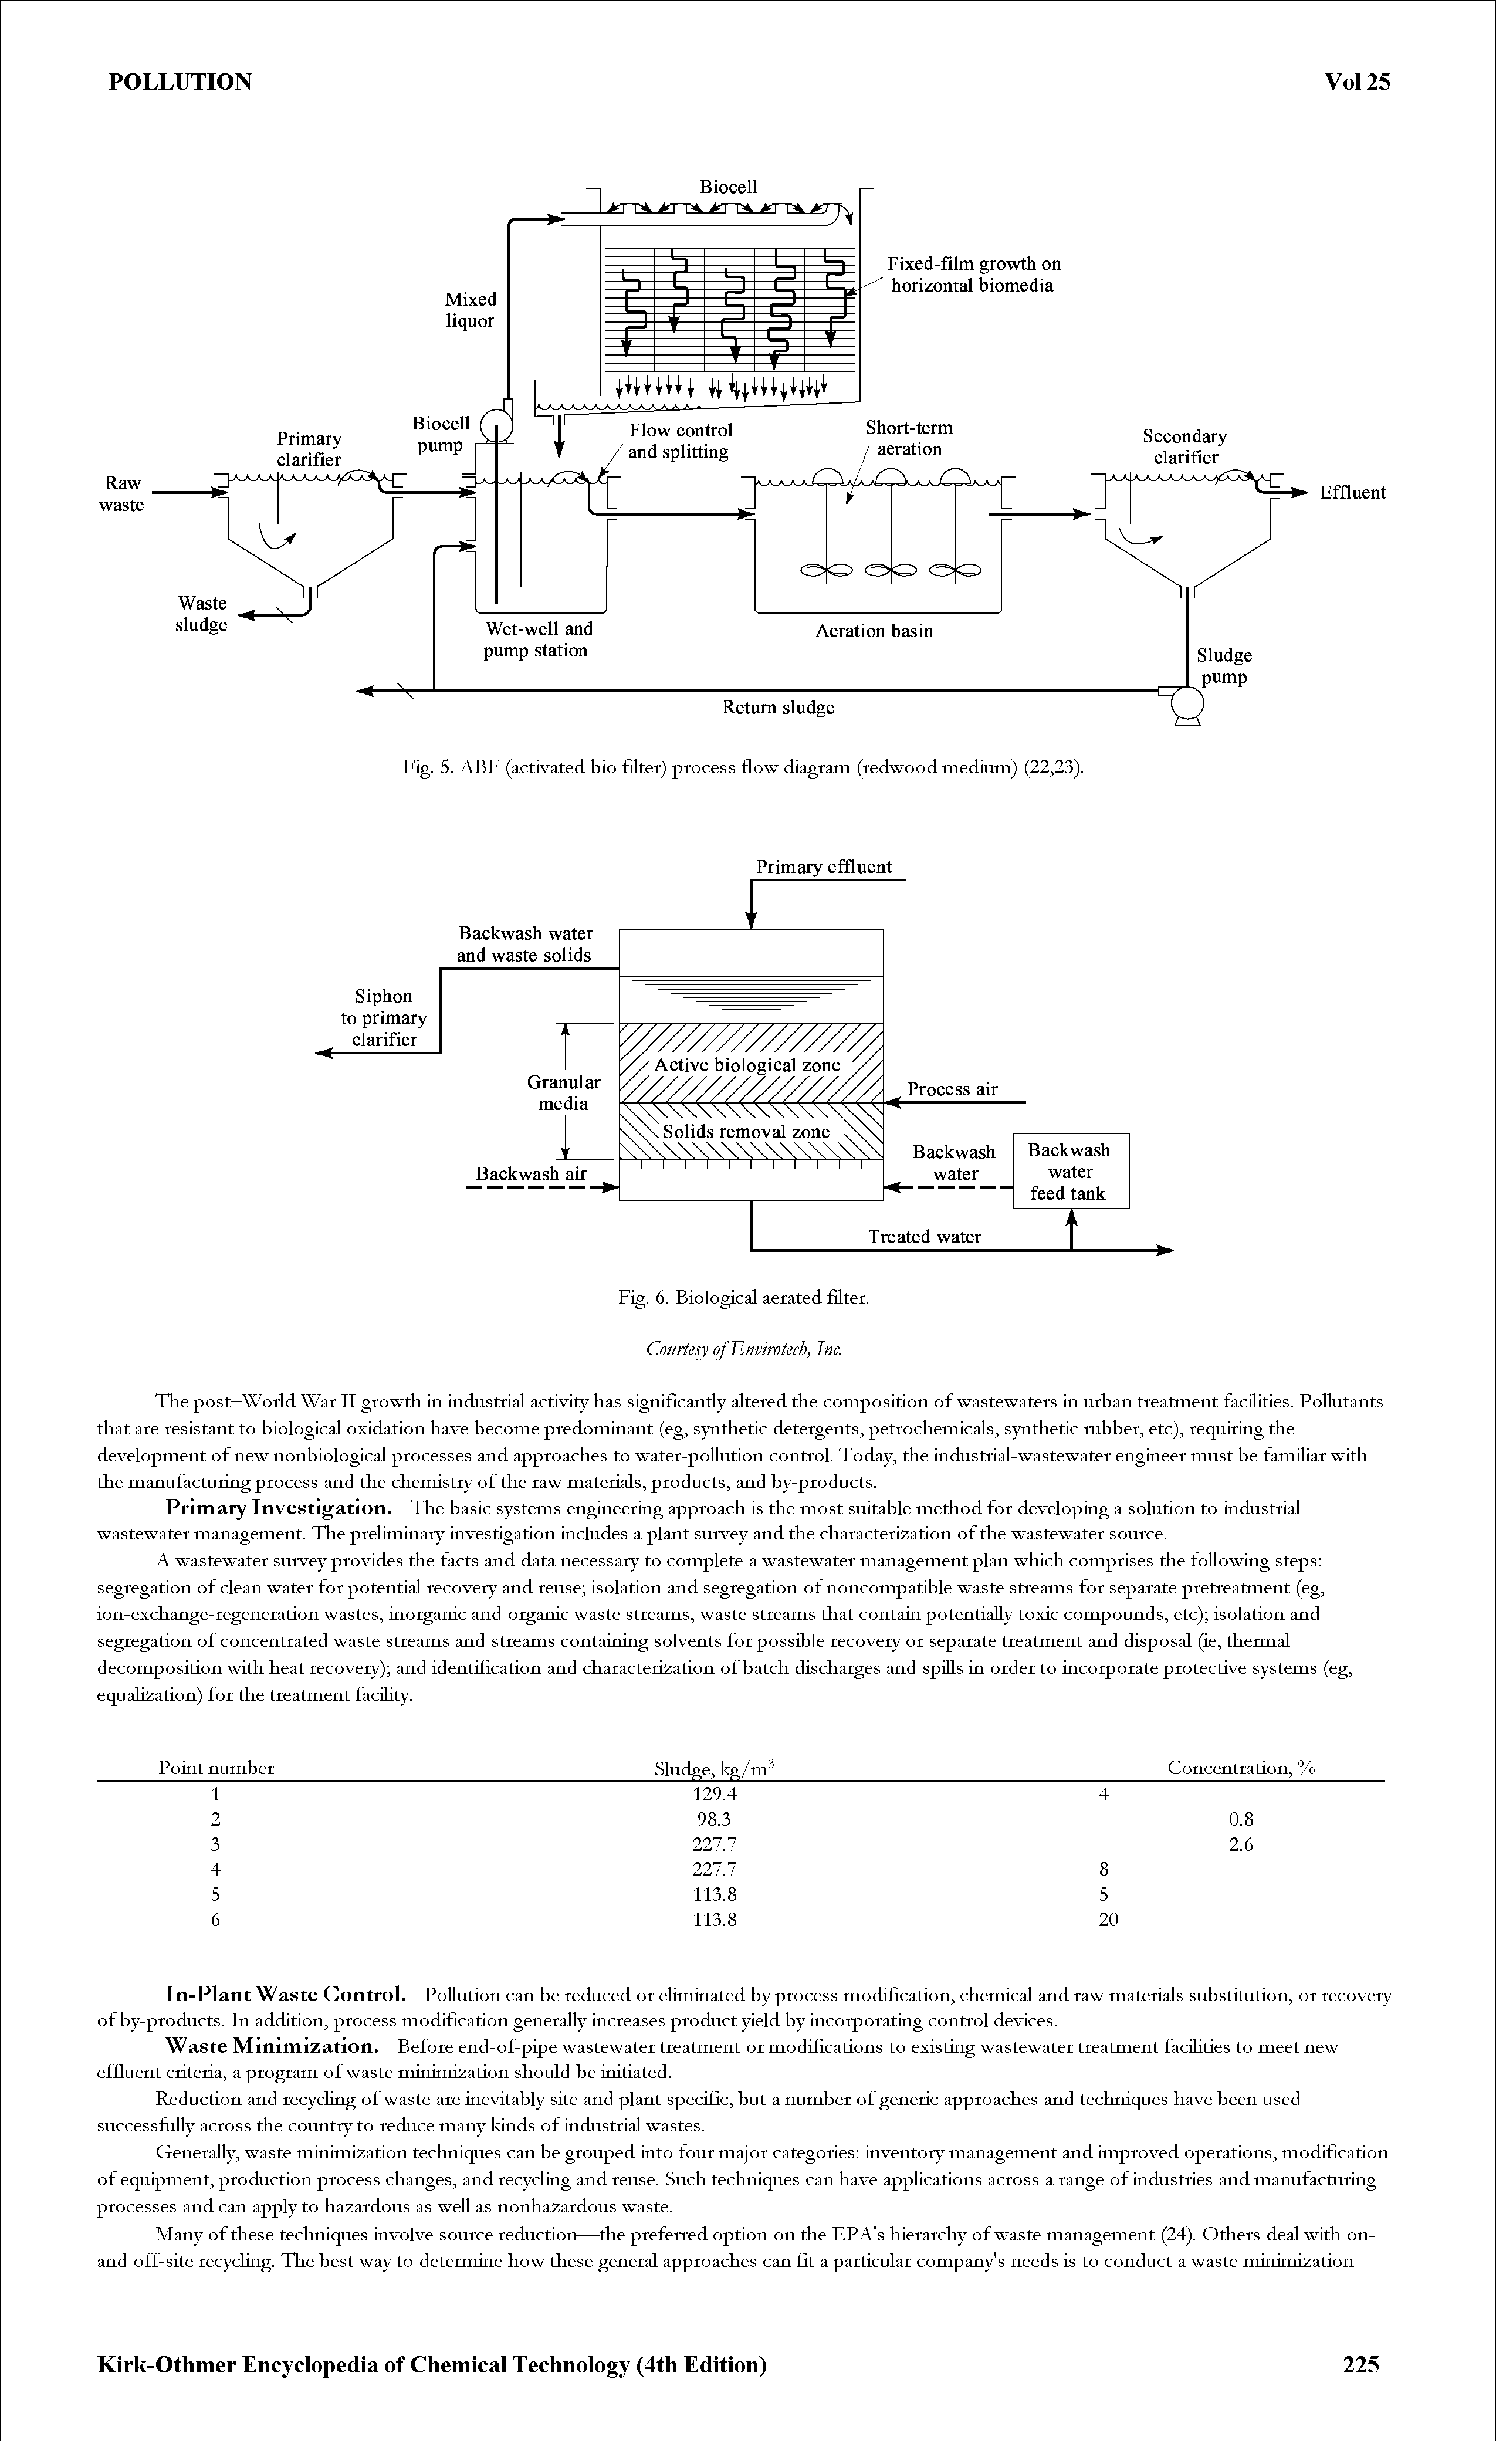 Fig. 5. ABF (activated bio filter) process flow diagram (redwood medium) (22,23).